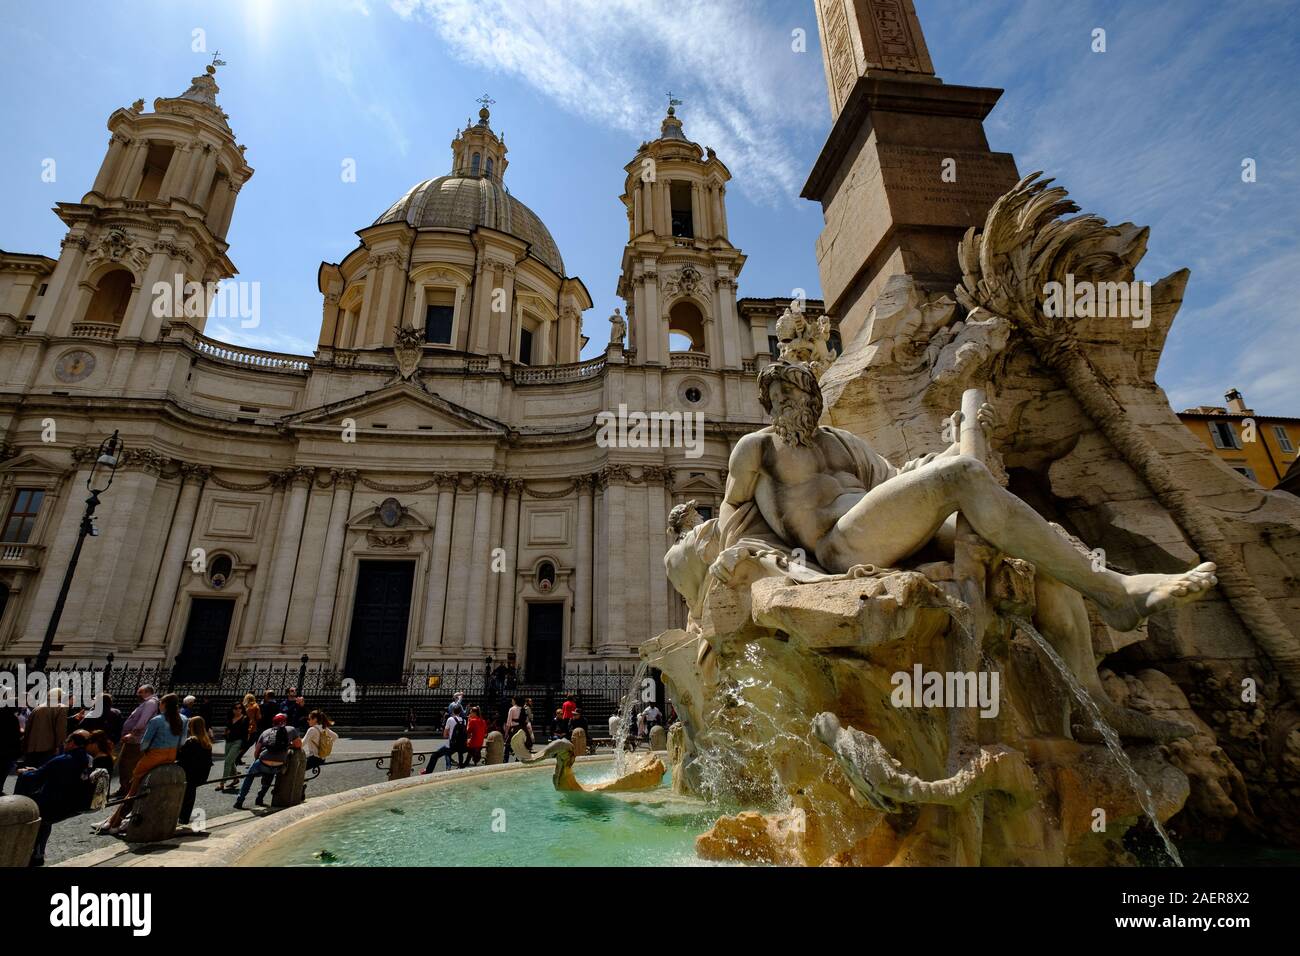 The Fountain of Neptune (Fontana del Nettuno) in Piazza Navona, Rome, Italy Stock Photo